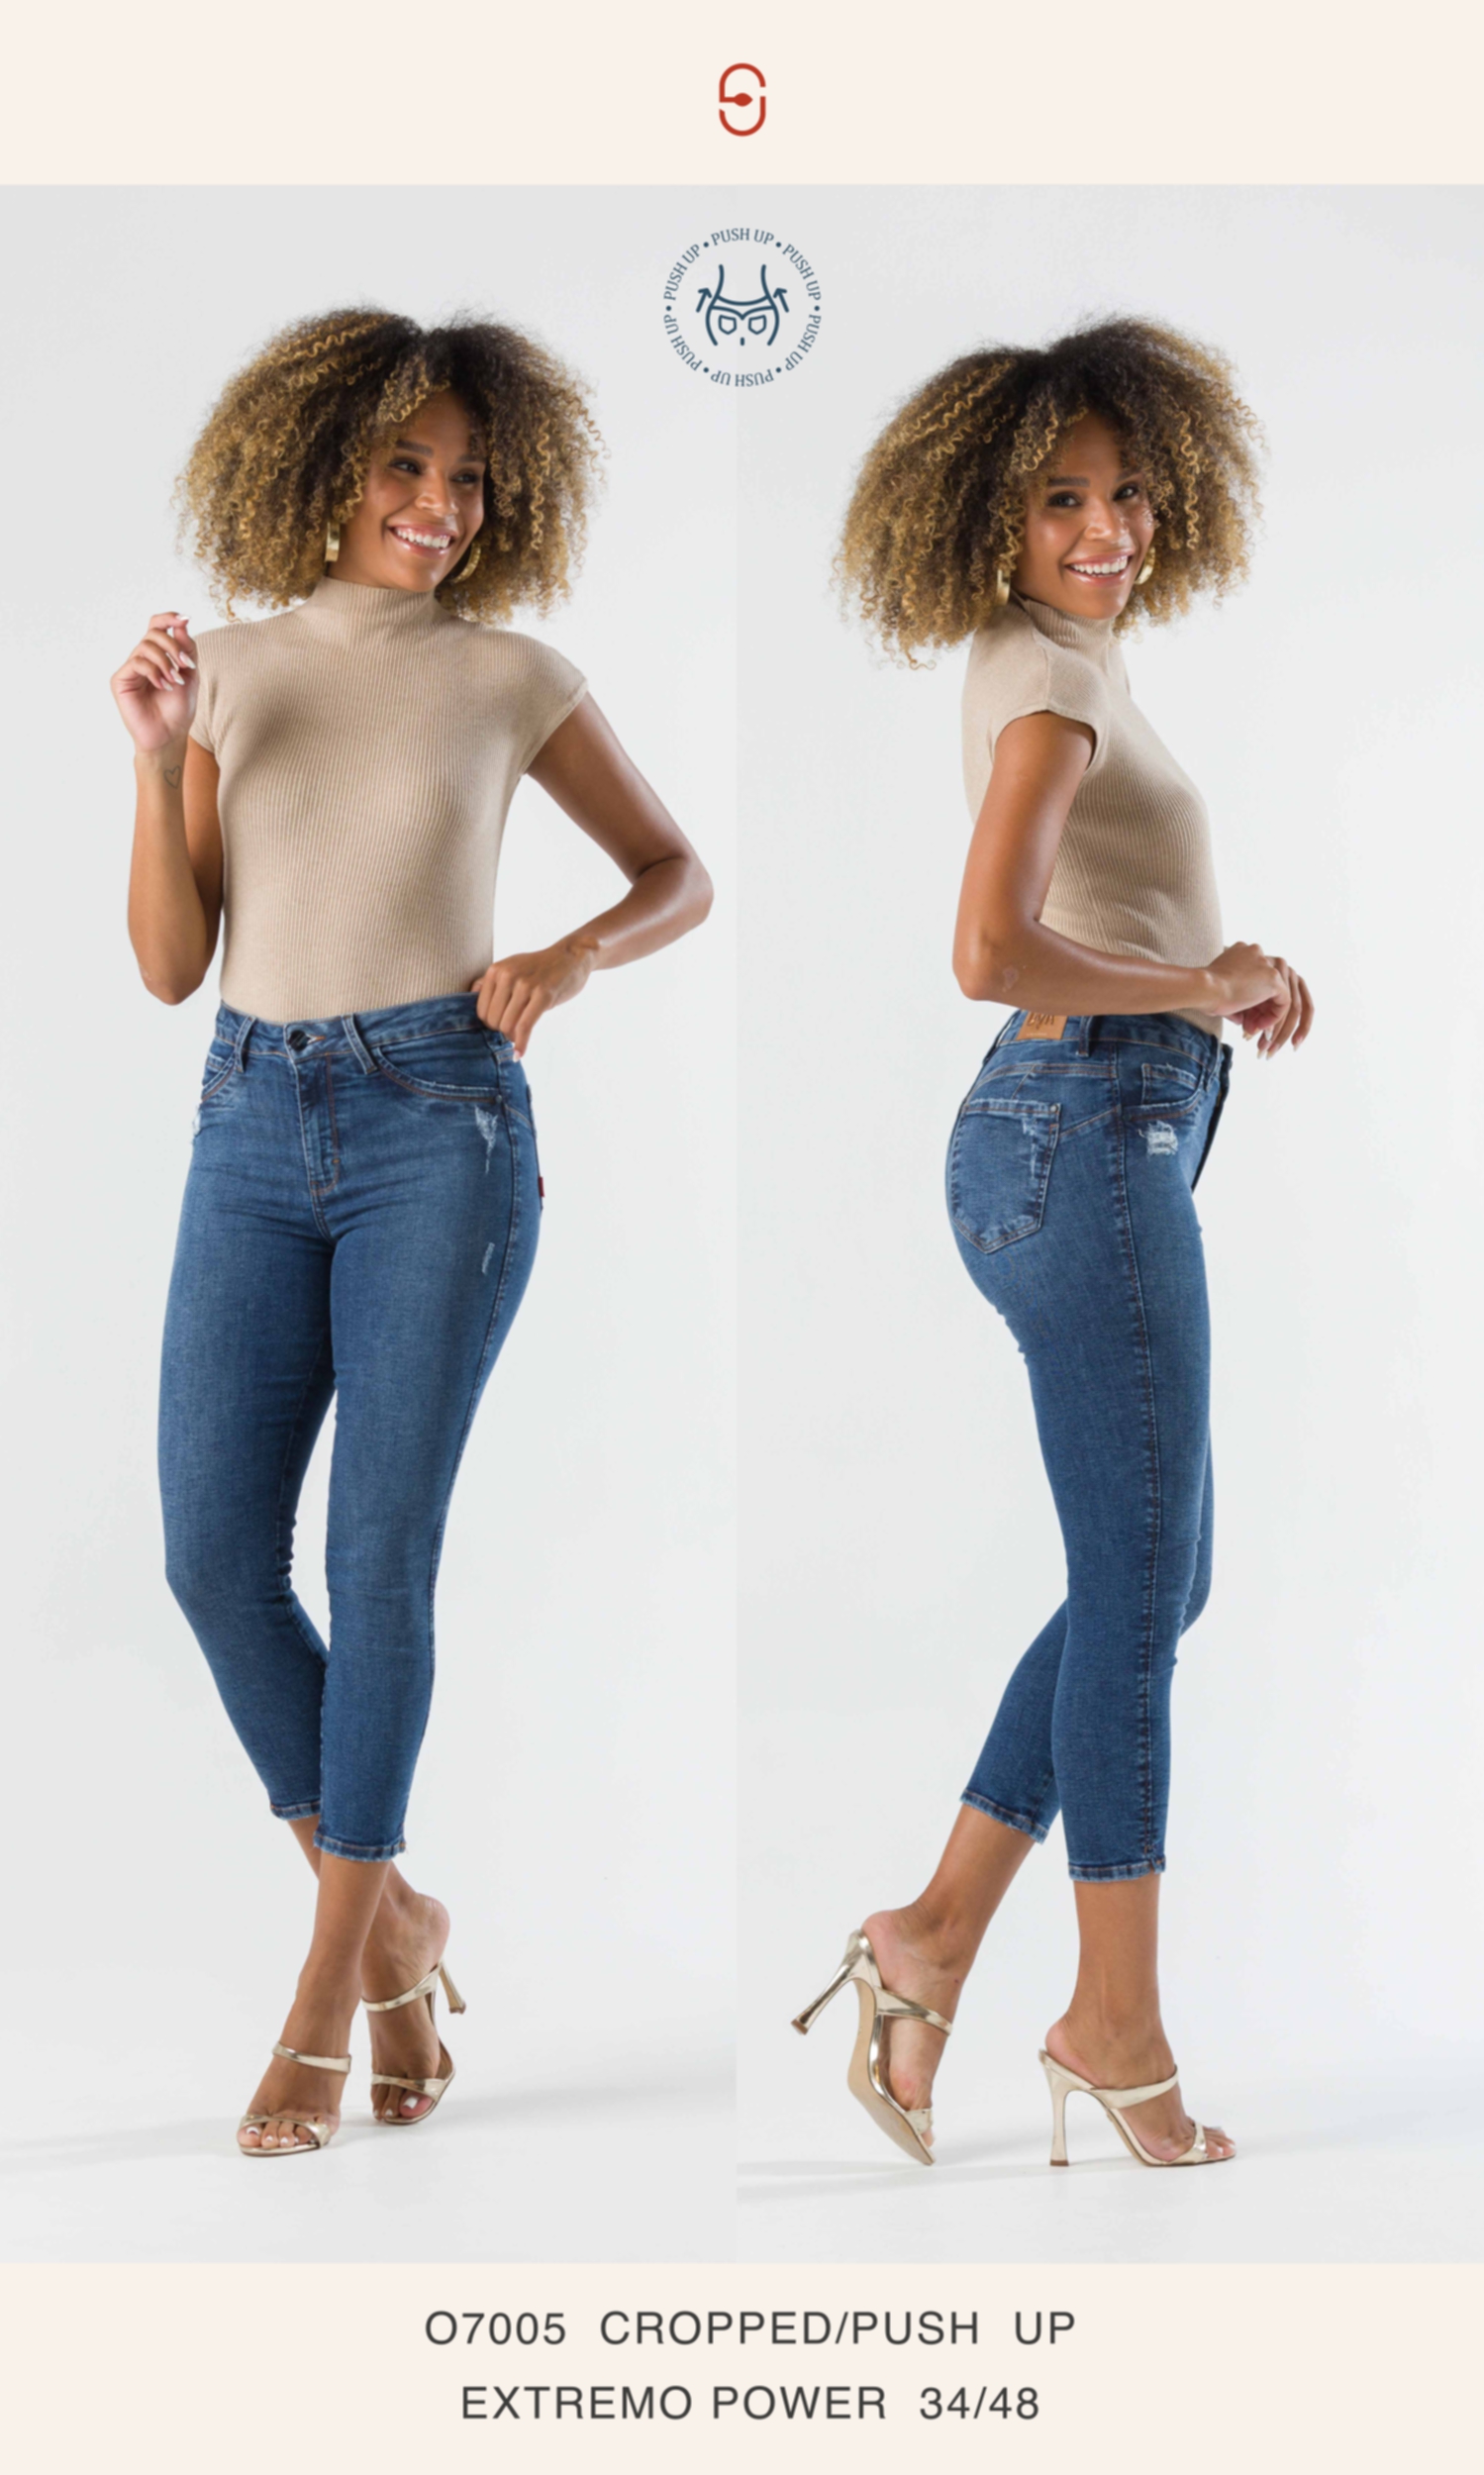 https://cdn.awsli.com.br/2500x2500/1397/1397828/produto/230694619/cal-a-feminina-jeans-cropped-push-up---divero-jeans-01-rpmarvyahu.jpg